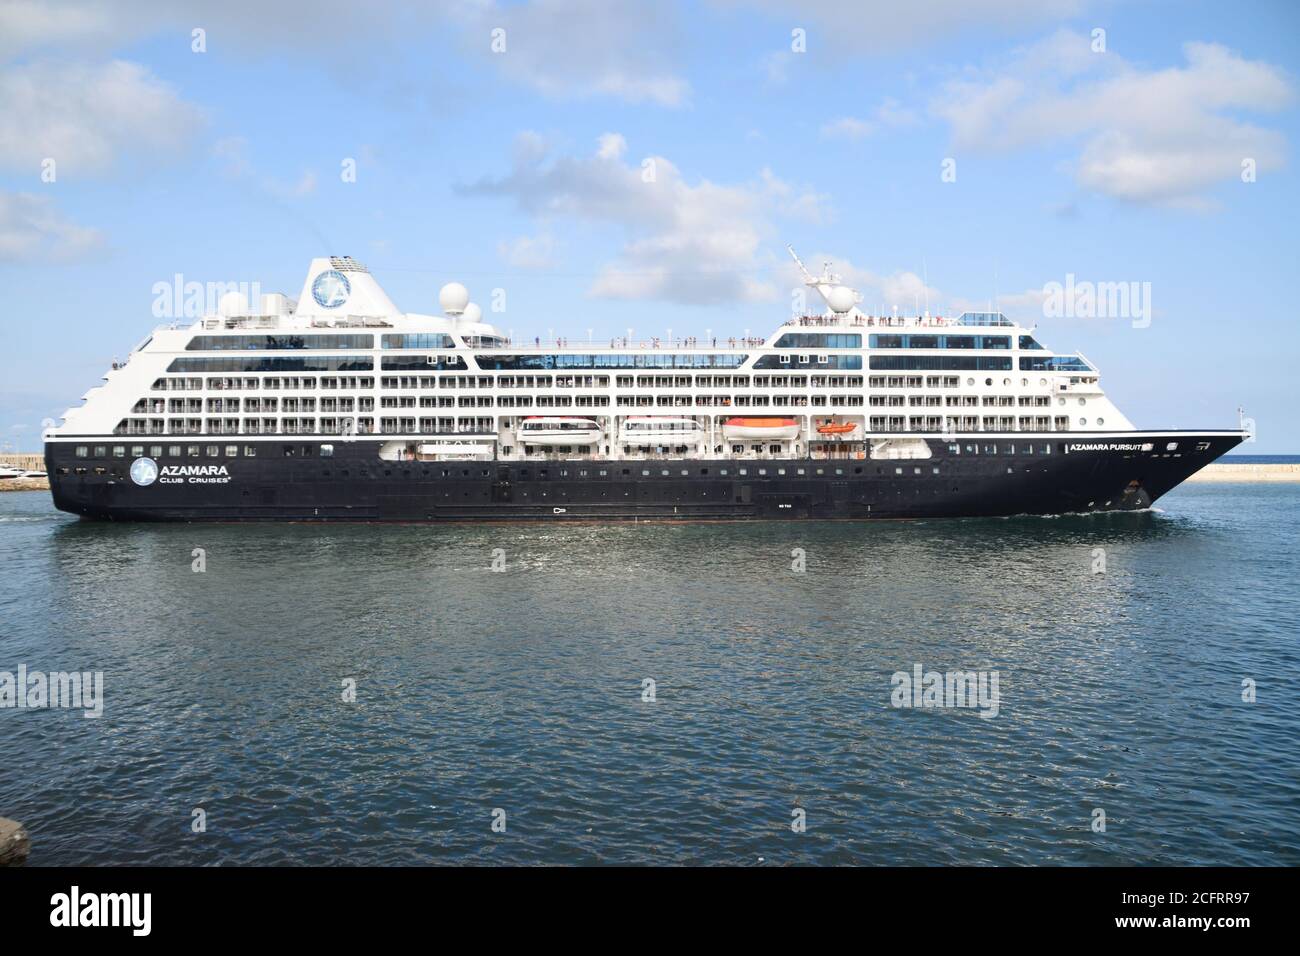 Cruise ship Azamara Pursuit of the Azamara Club Cruises company leaving the port of Barcelona. July 27, 2019. Stock Photo